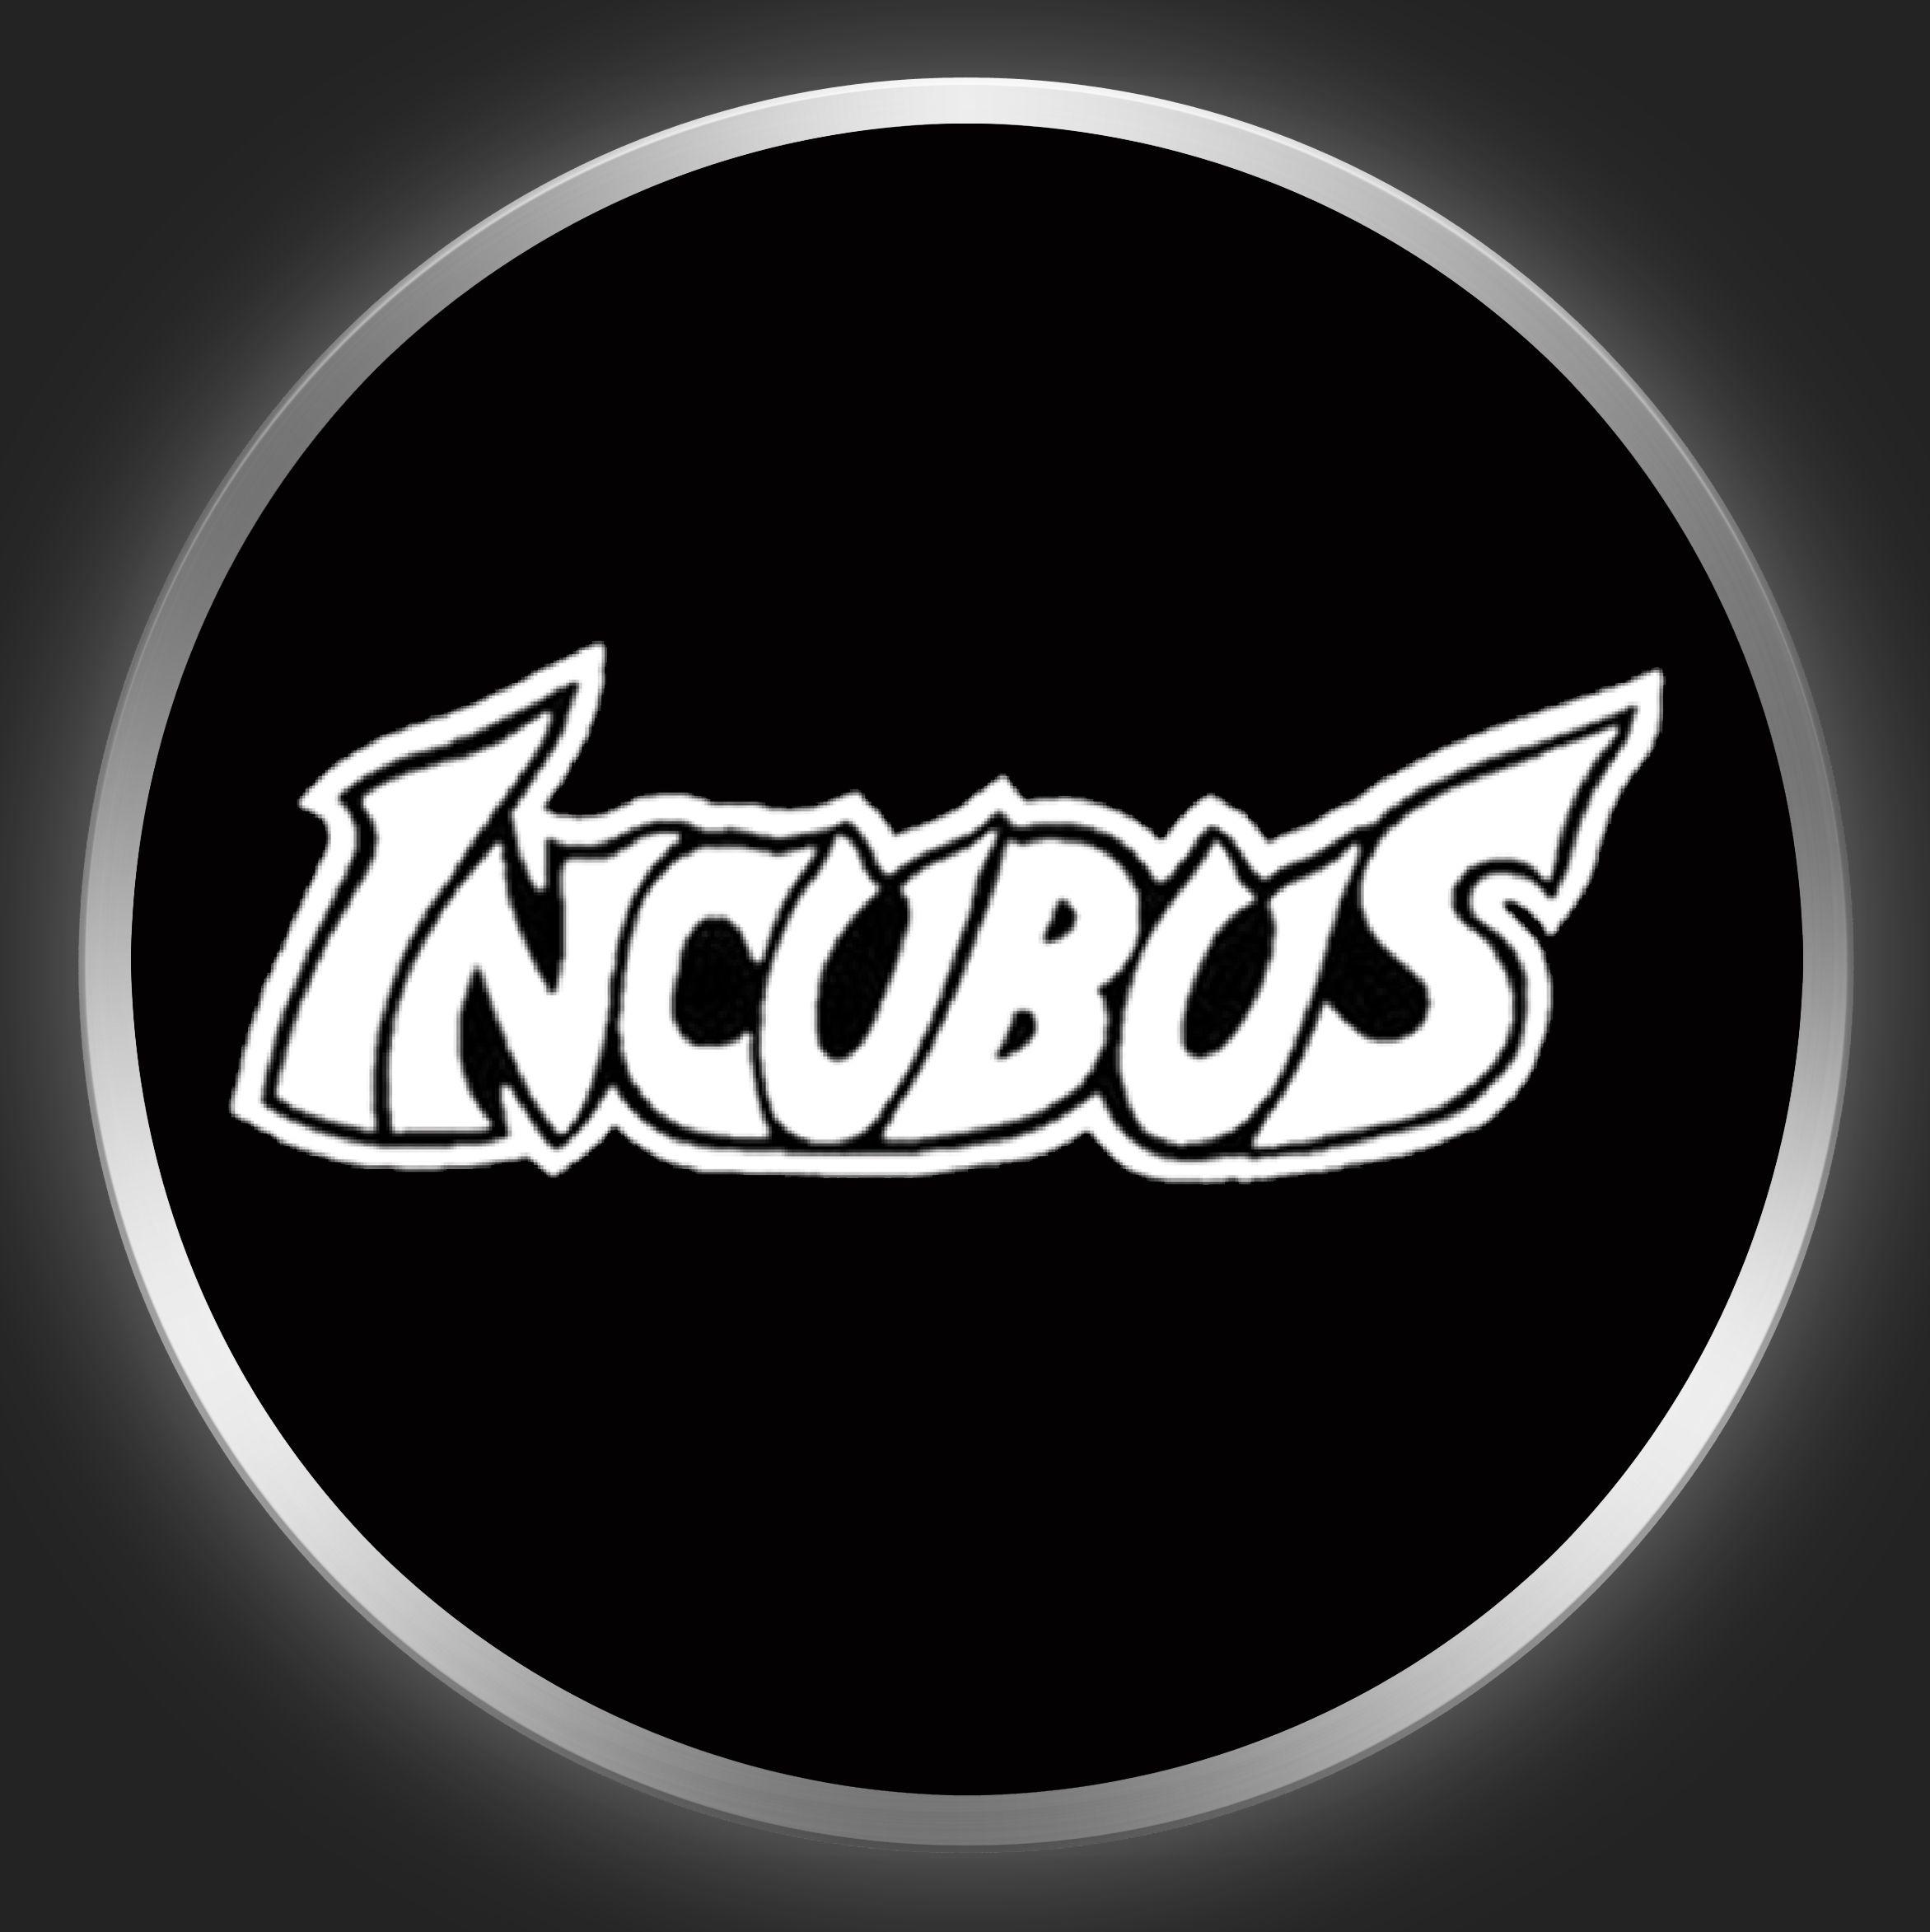 Incubus Logo - INCUBUS Logo On Black Button